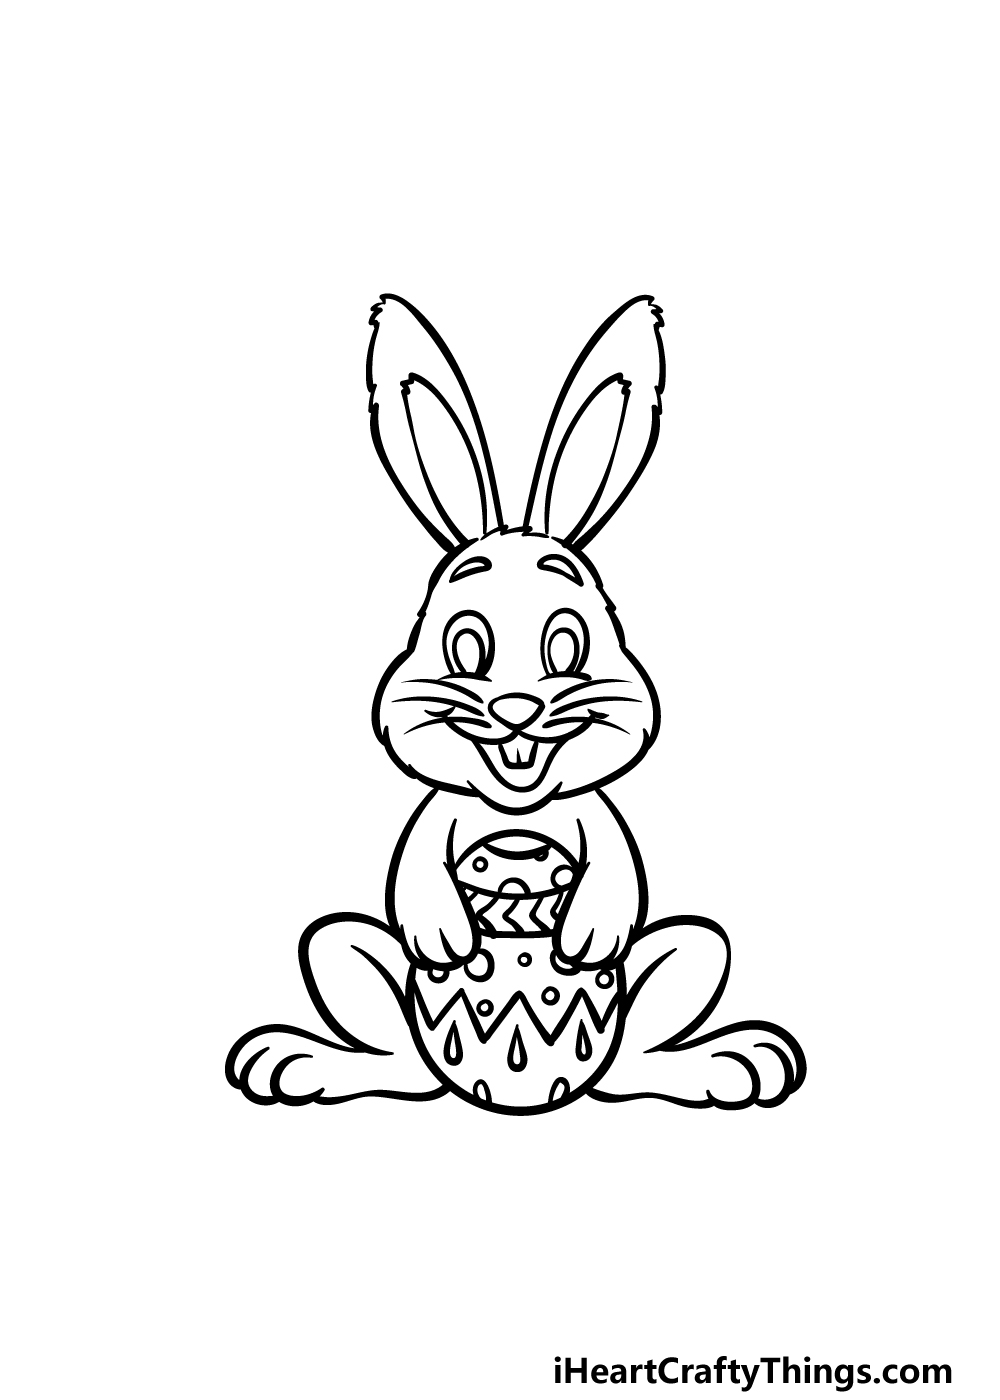 One single line drawing of cute jumping rabbit  Stock Illustration  69258846  PIXTA